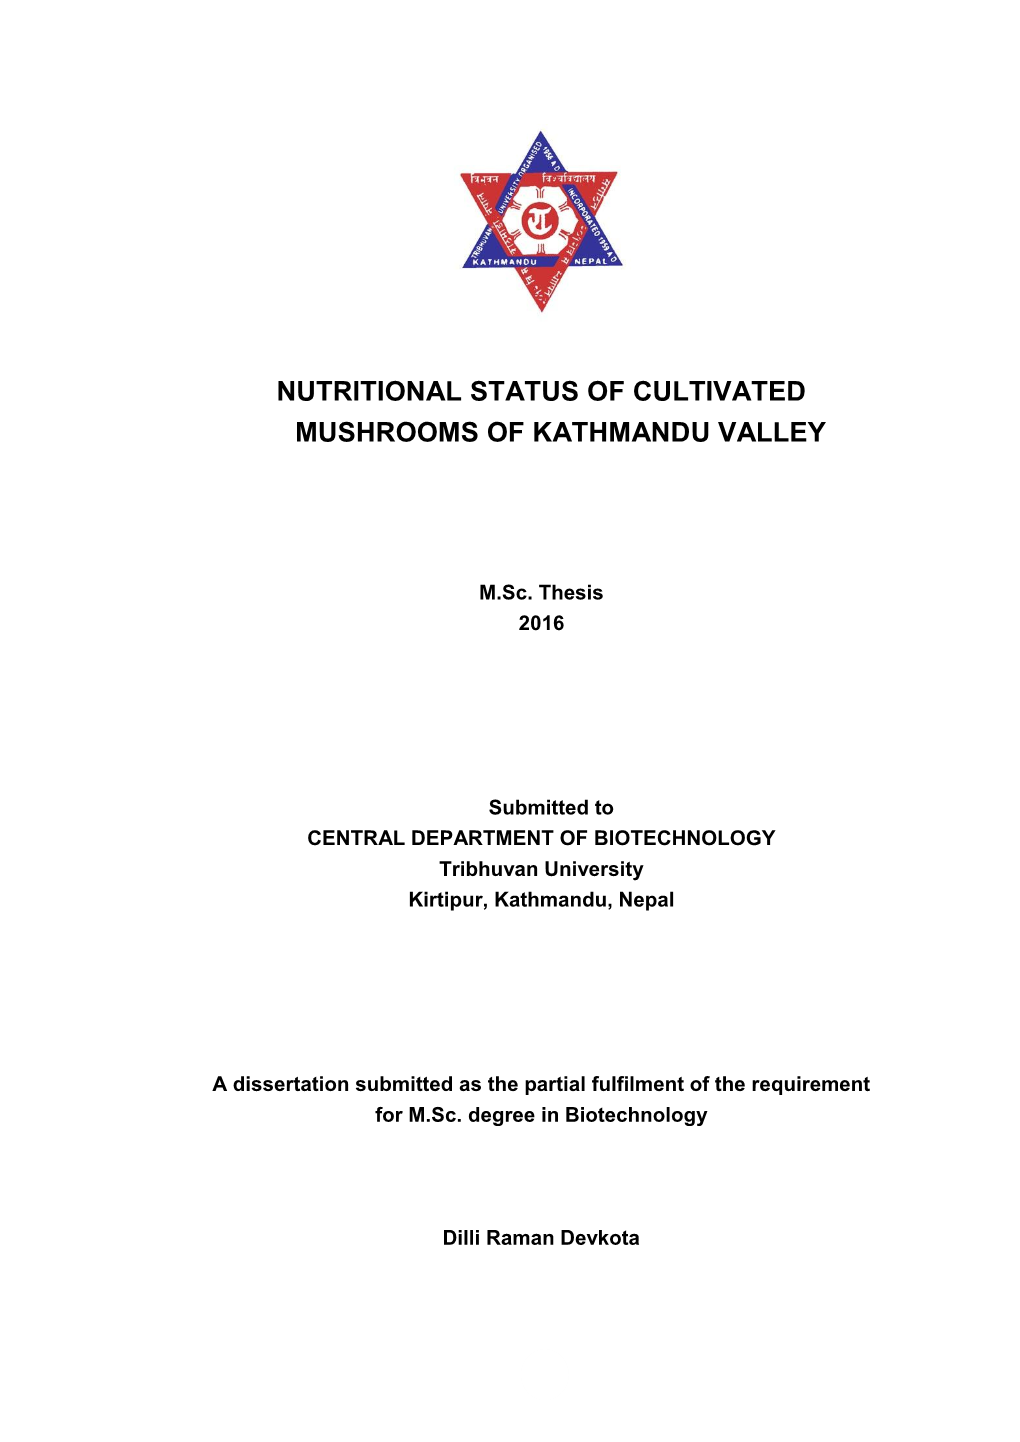 Nutritional Status of Cultivated Mushrooms of Kathmandu Valley